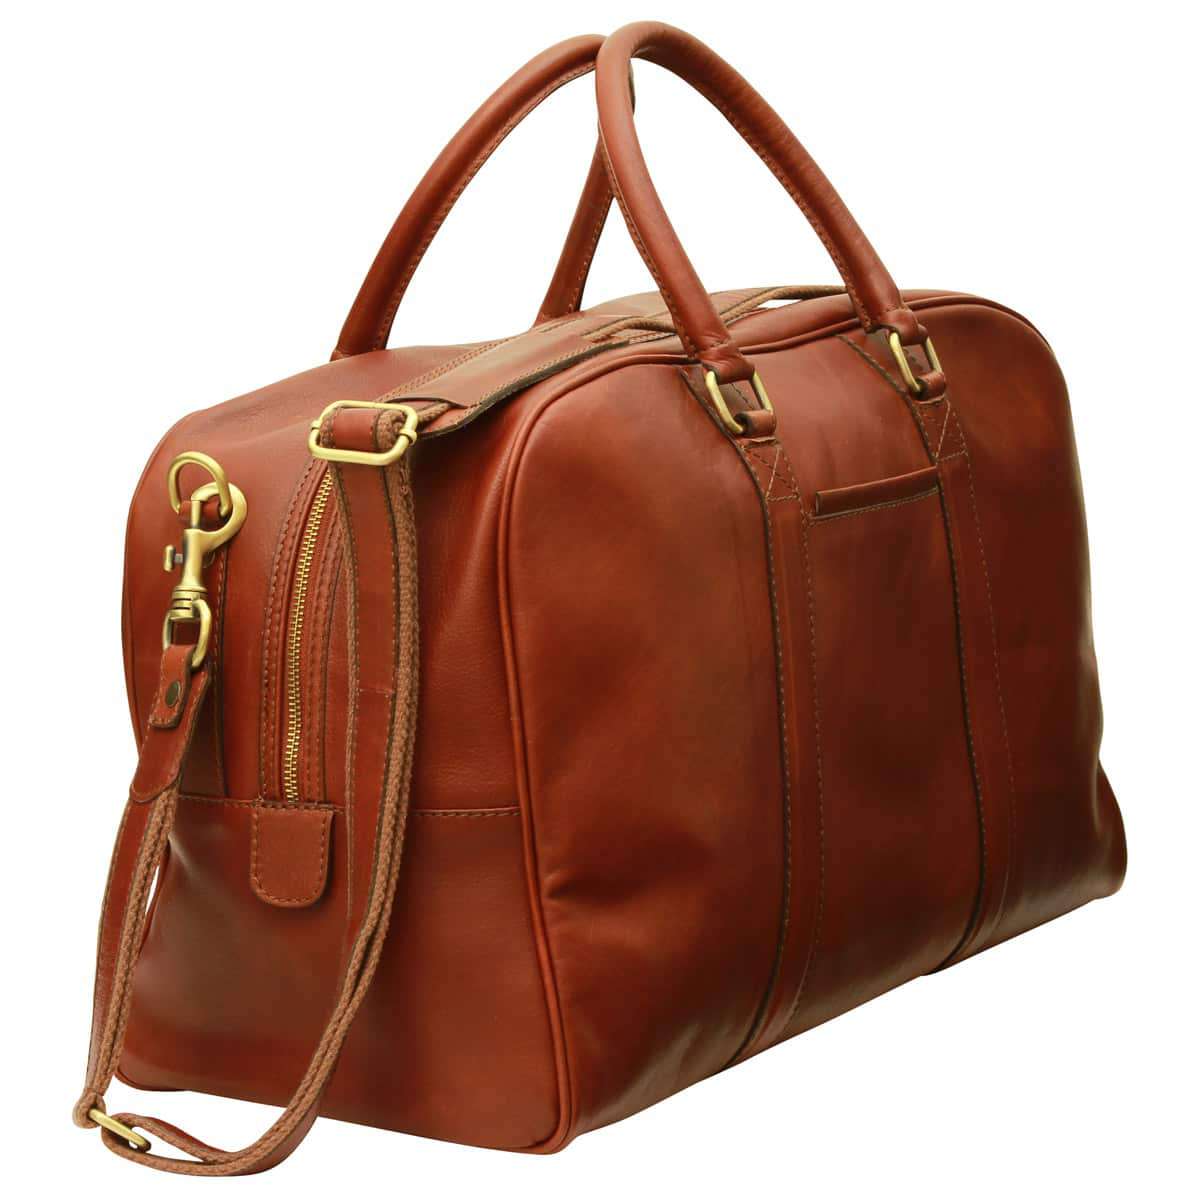 Soft Calfskin Leather Travel Bag - Brown | 030591MA US | Old Angler Firenze